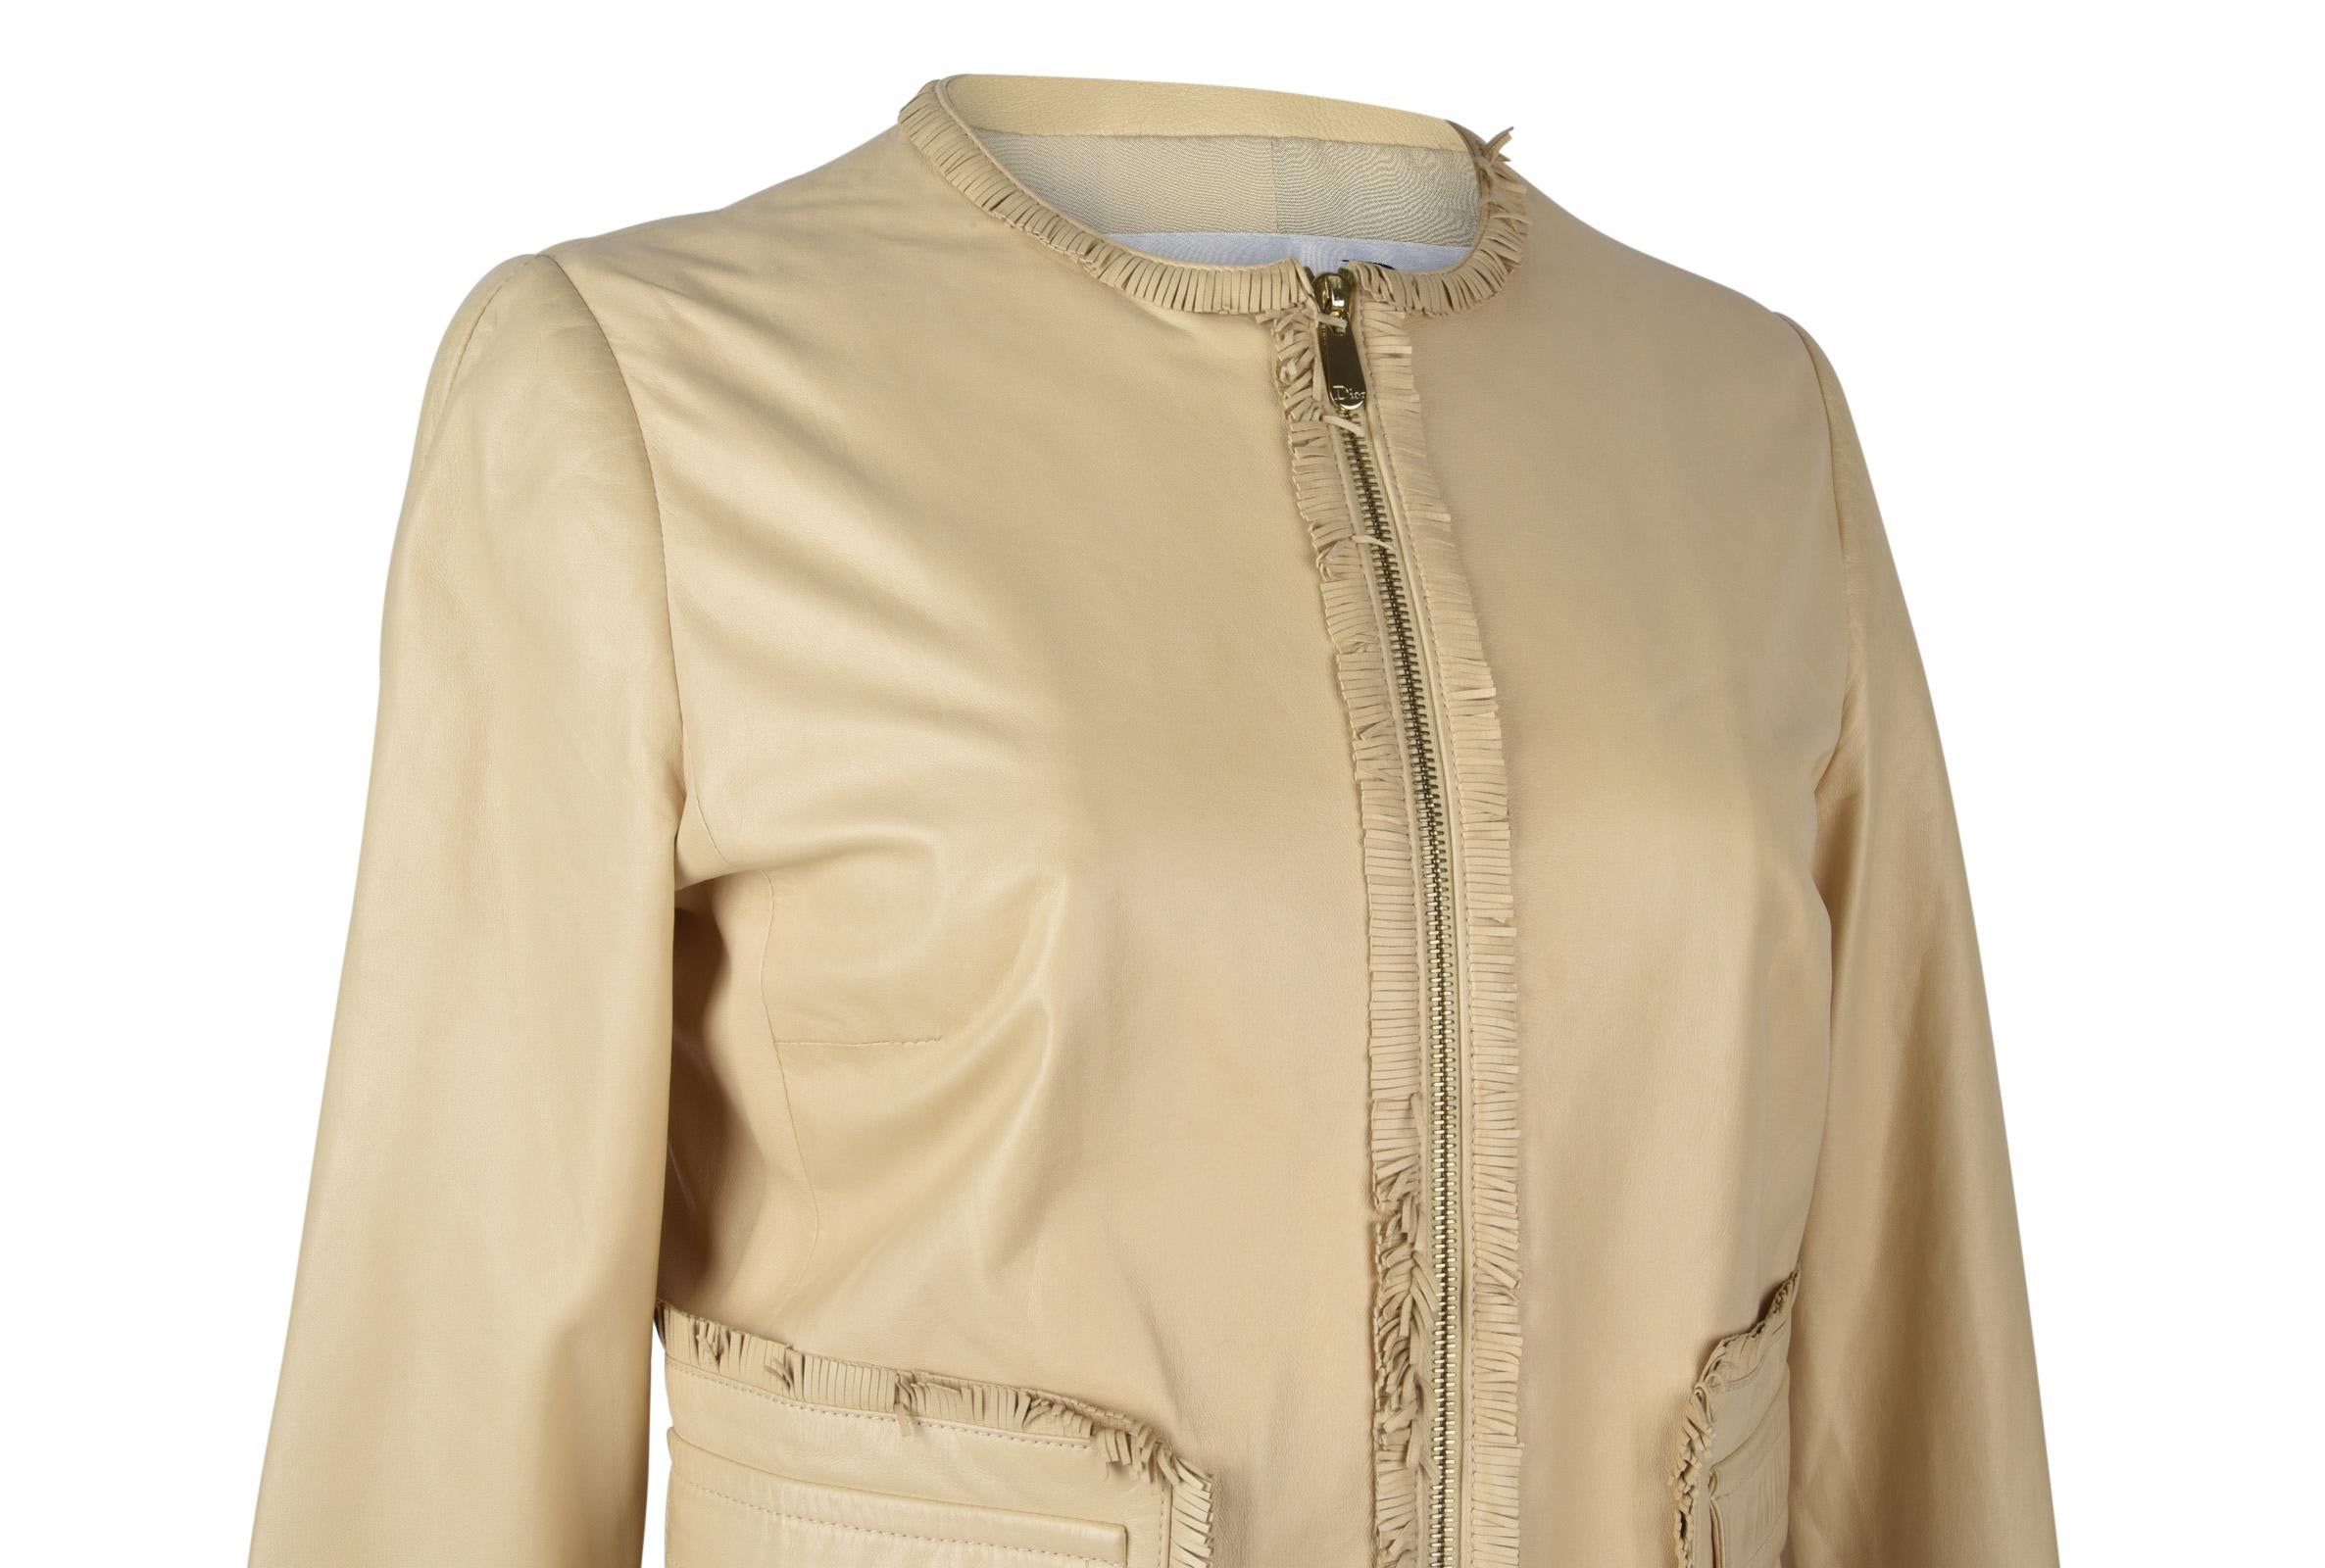 Women's Christian Dior Jacket Butter Lambskin Leather fits 6